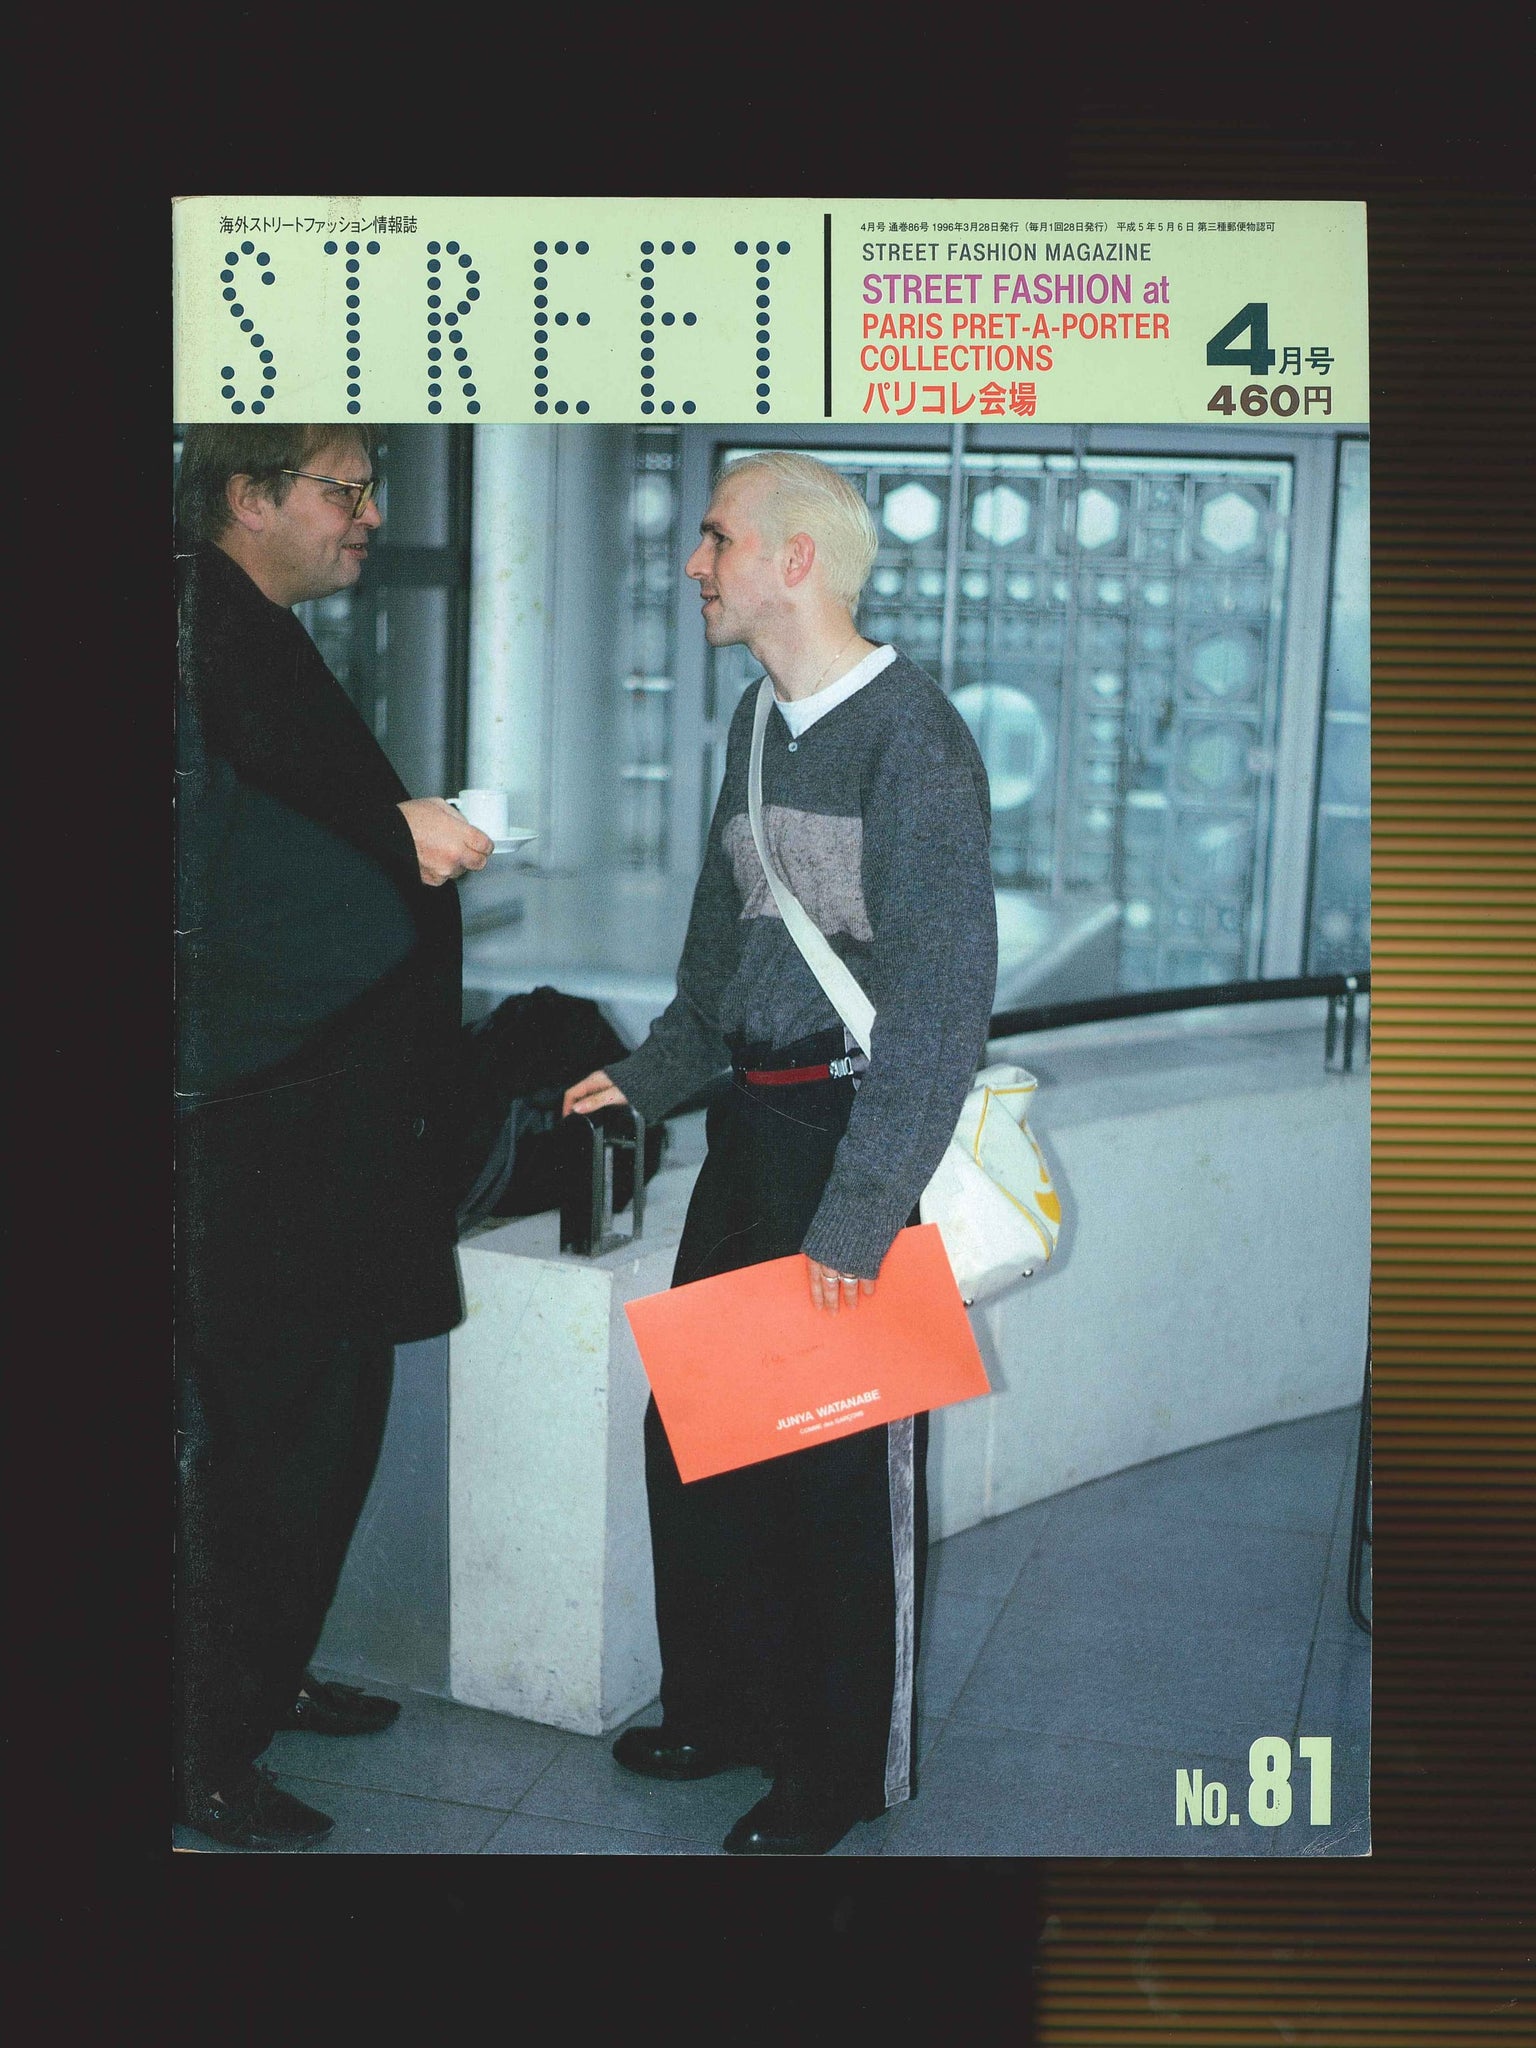 STREET magazine no. 81 / april 1996 / paris collections / Shoichi Aoki